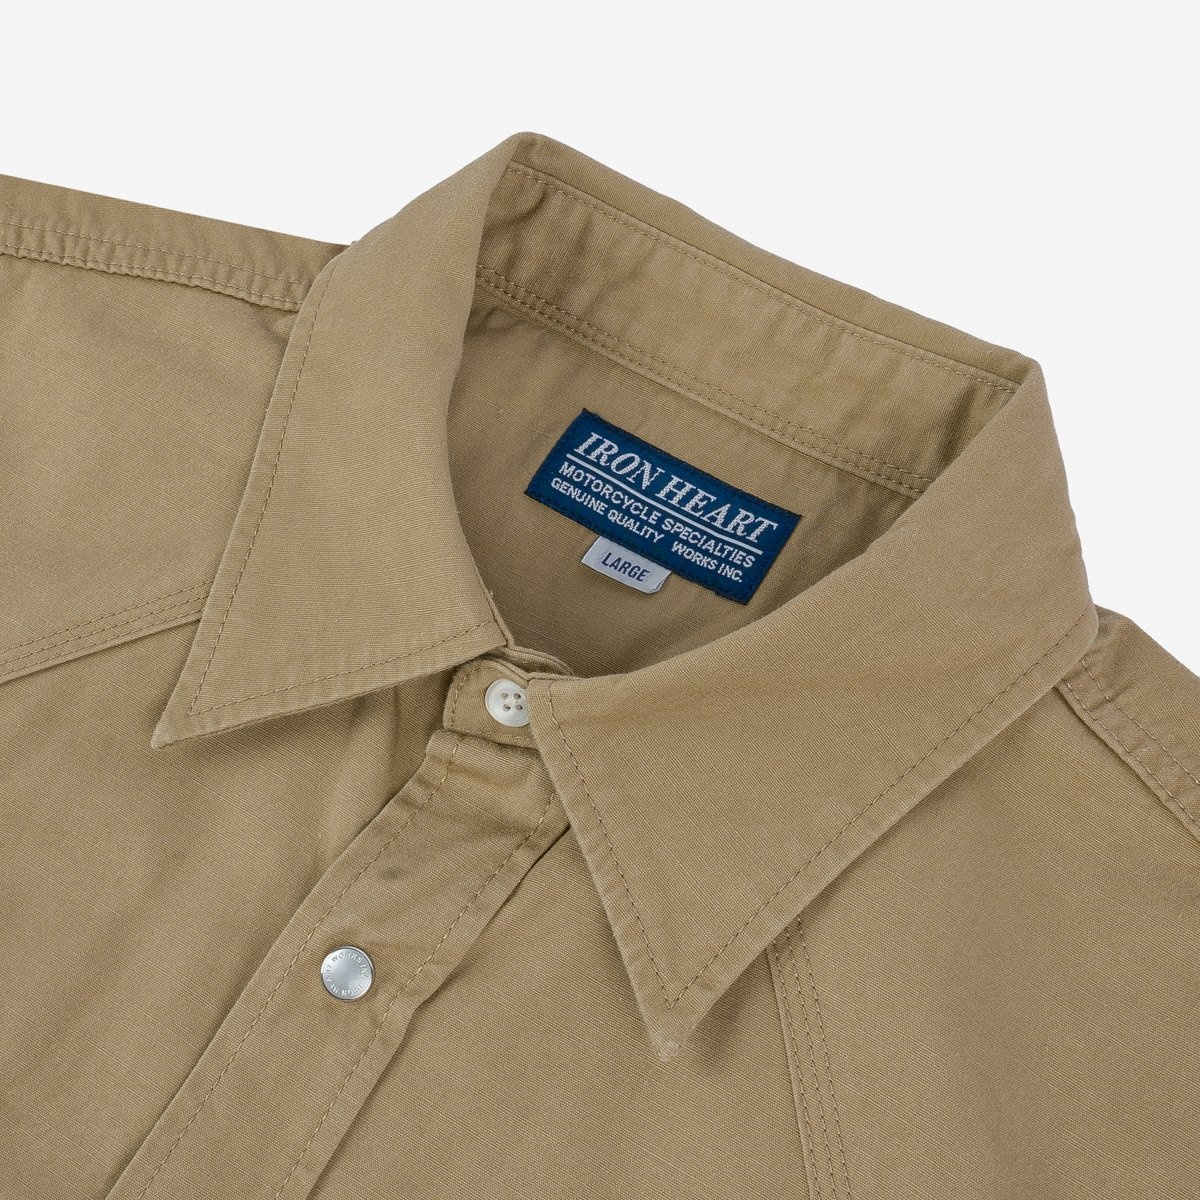 IHSH-387-KHA 7oz Fatigue Cloth Short Sleeved Western Shirt - Khaki - 6